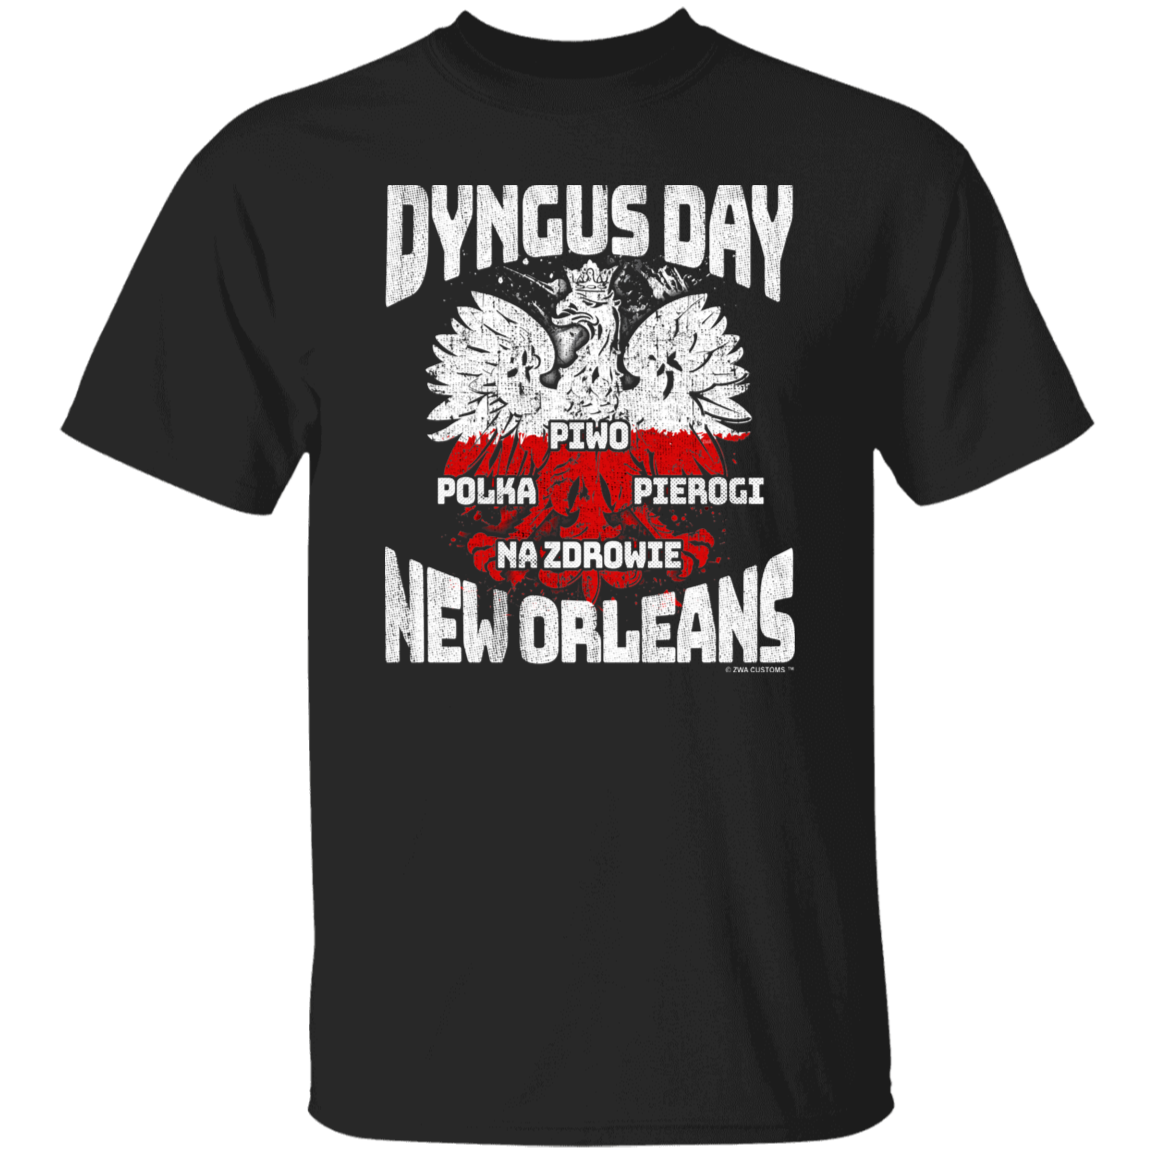 Dyngus Day New Orleans Apparel CustomCat G500 5.3 oz. T-Shirt Black S